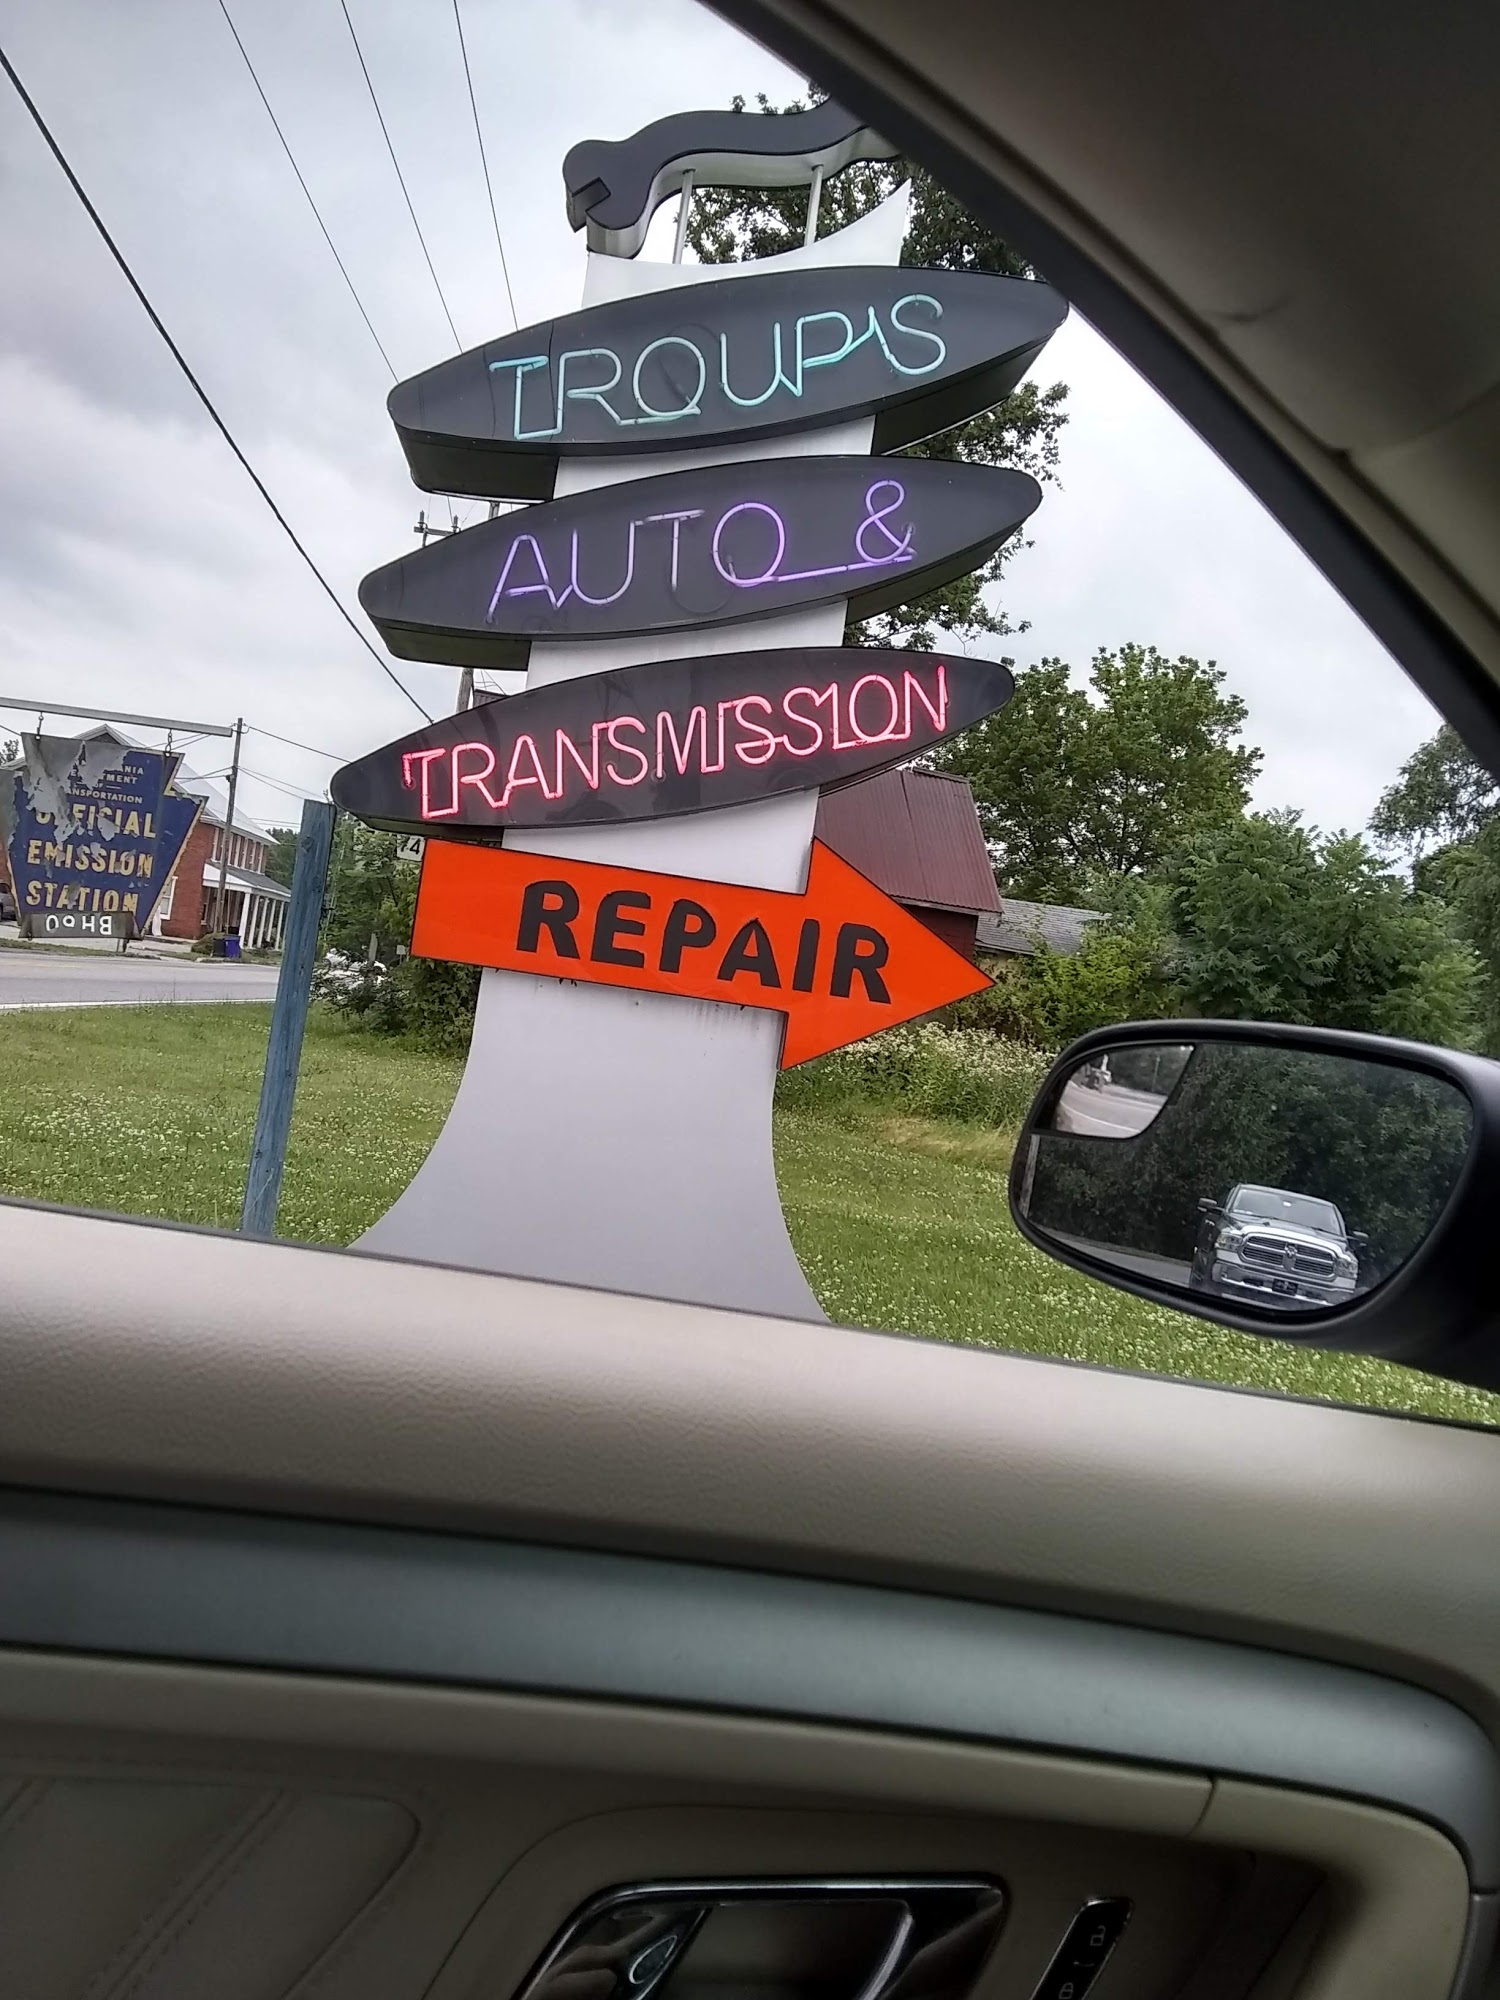 Troup's Auto & Transmission Repair